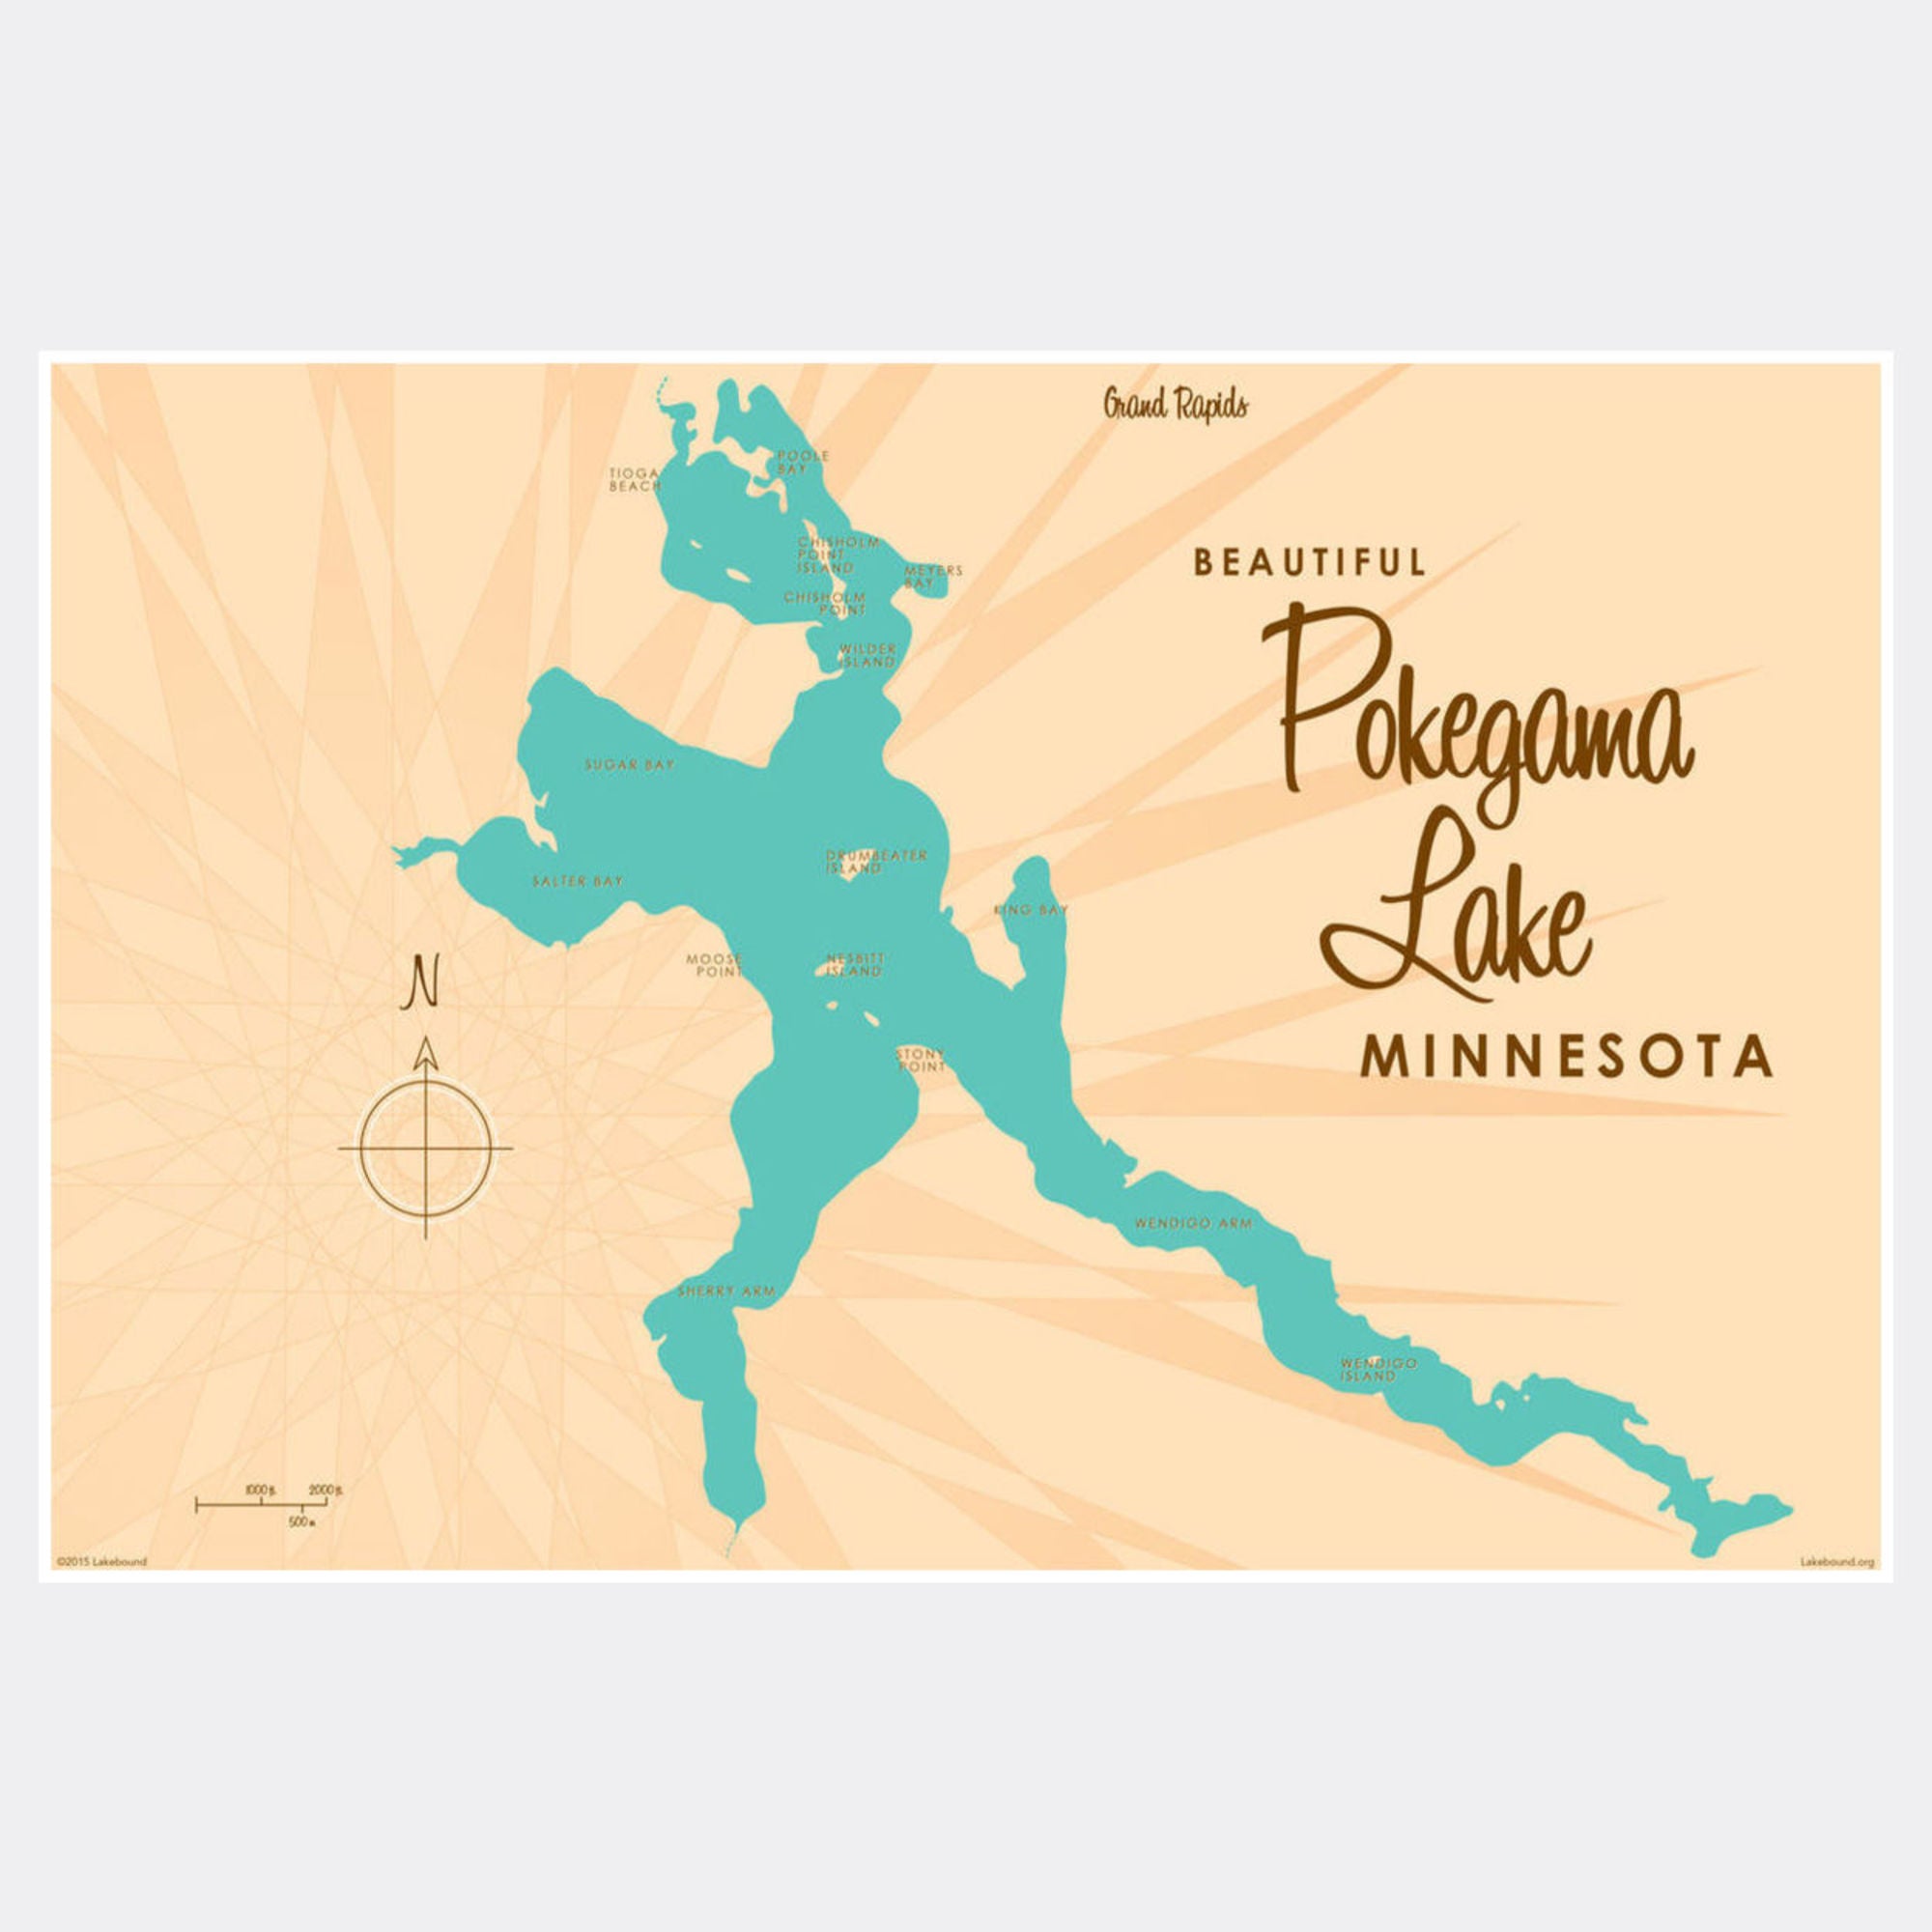 Pokegama Lake Minnesota, Paper Print